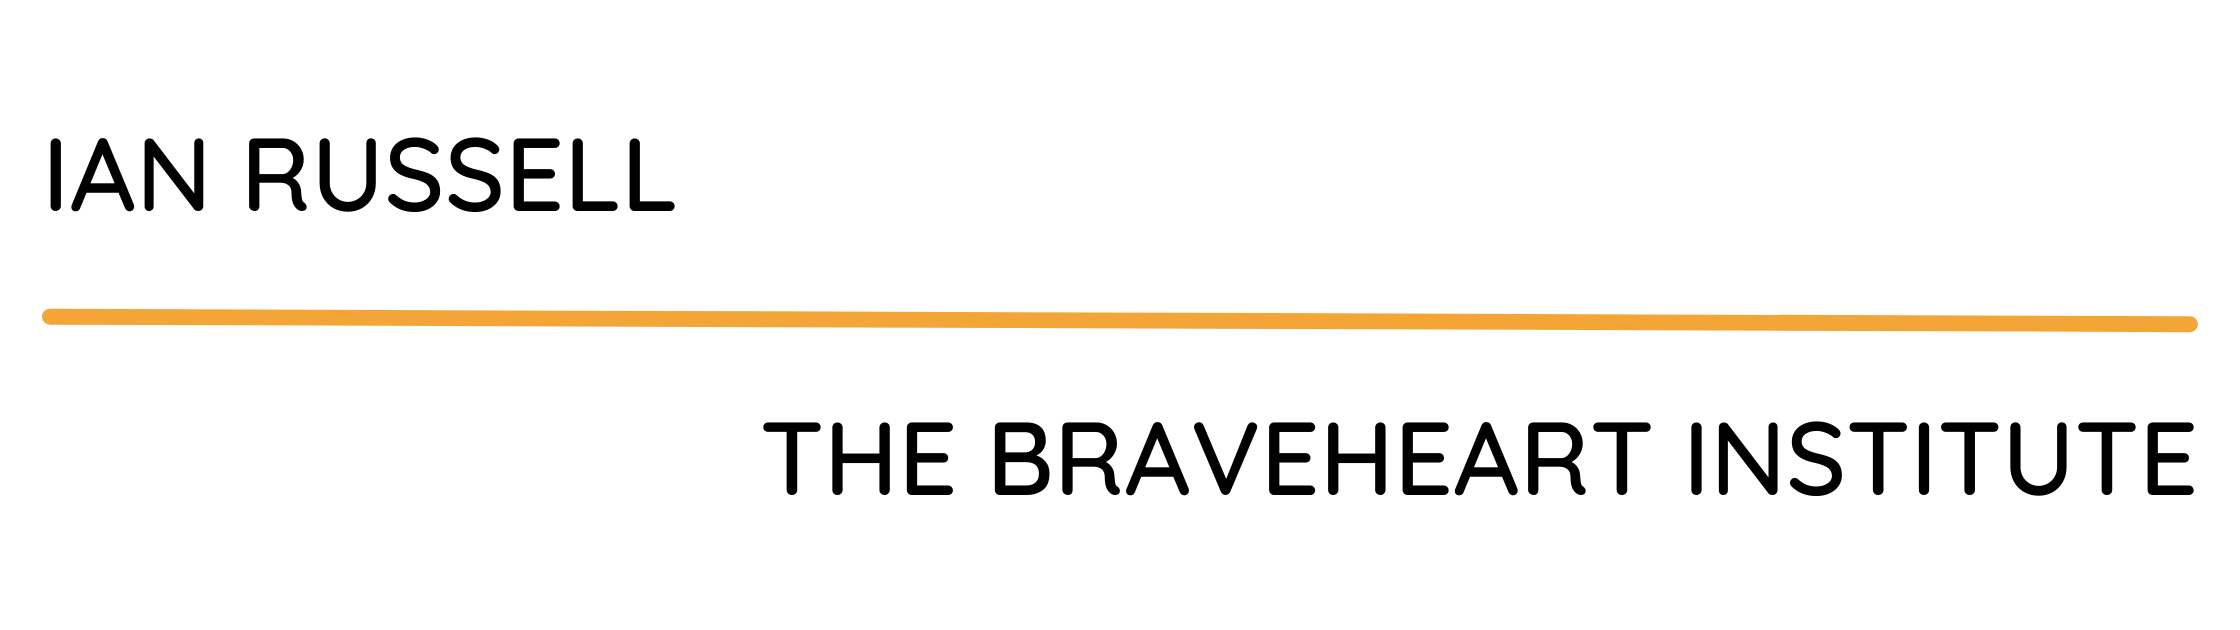 The Braveheart Institute logo